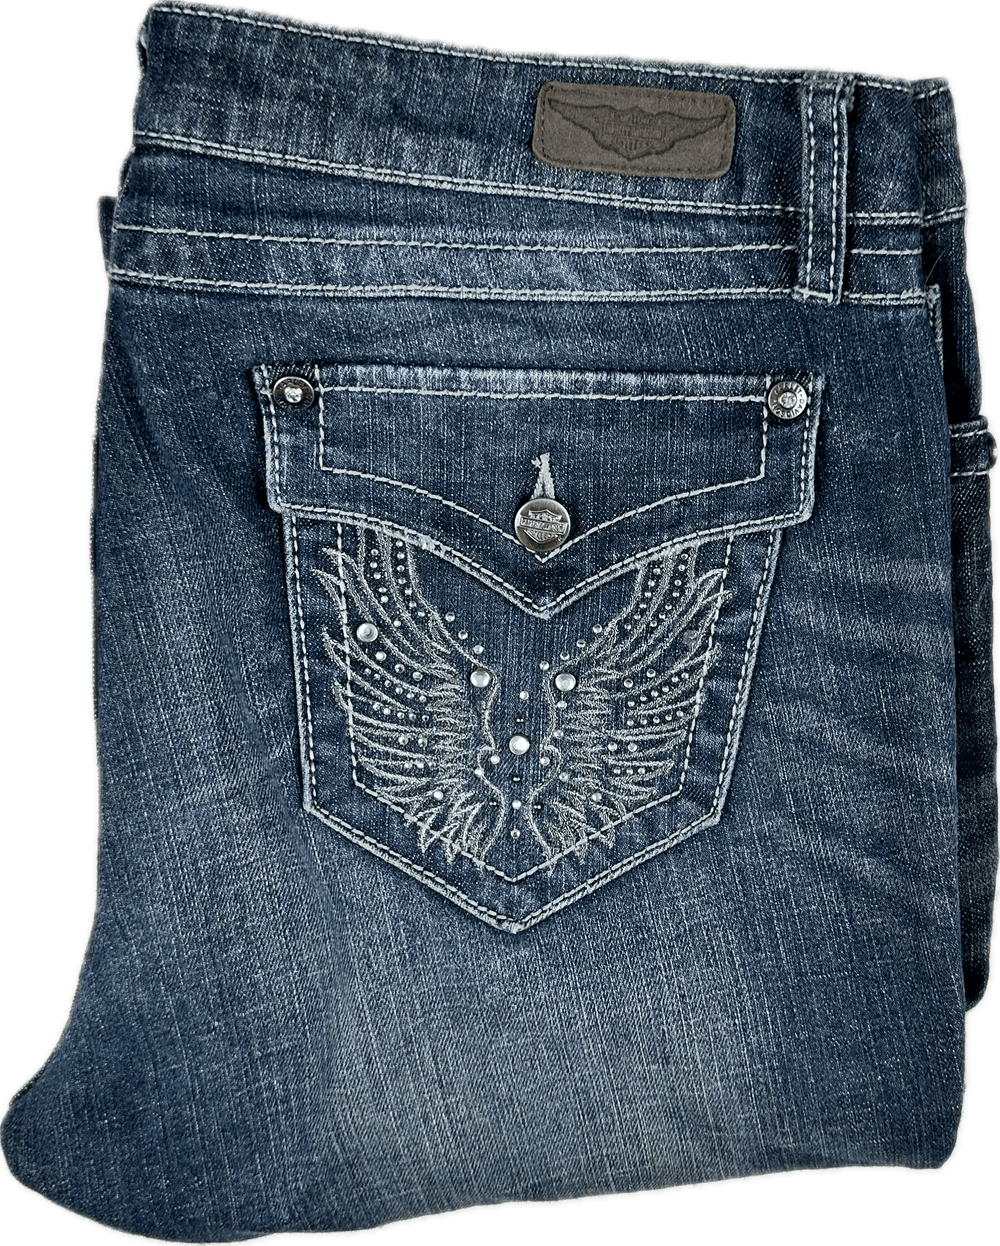 Harley Davidson Ladies Bootleg Jeans - Size 32 or 14 - Jean Pool